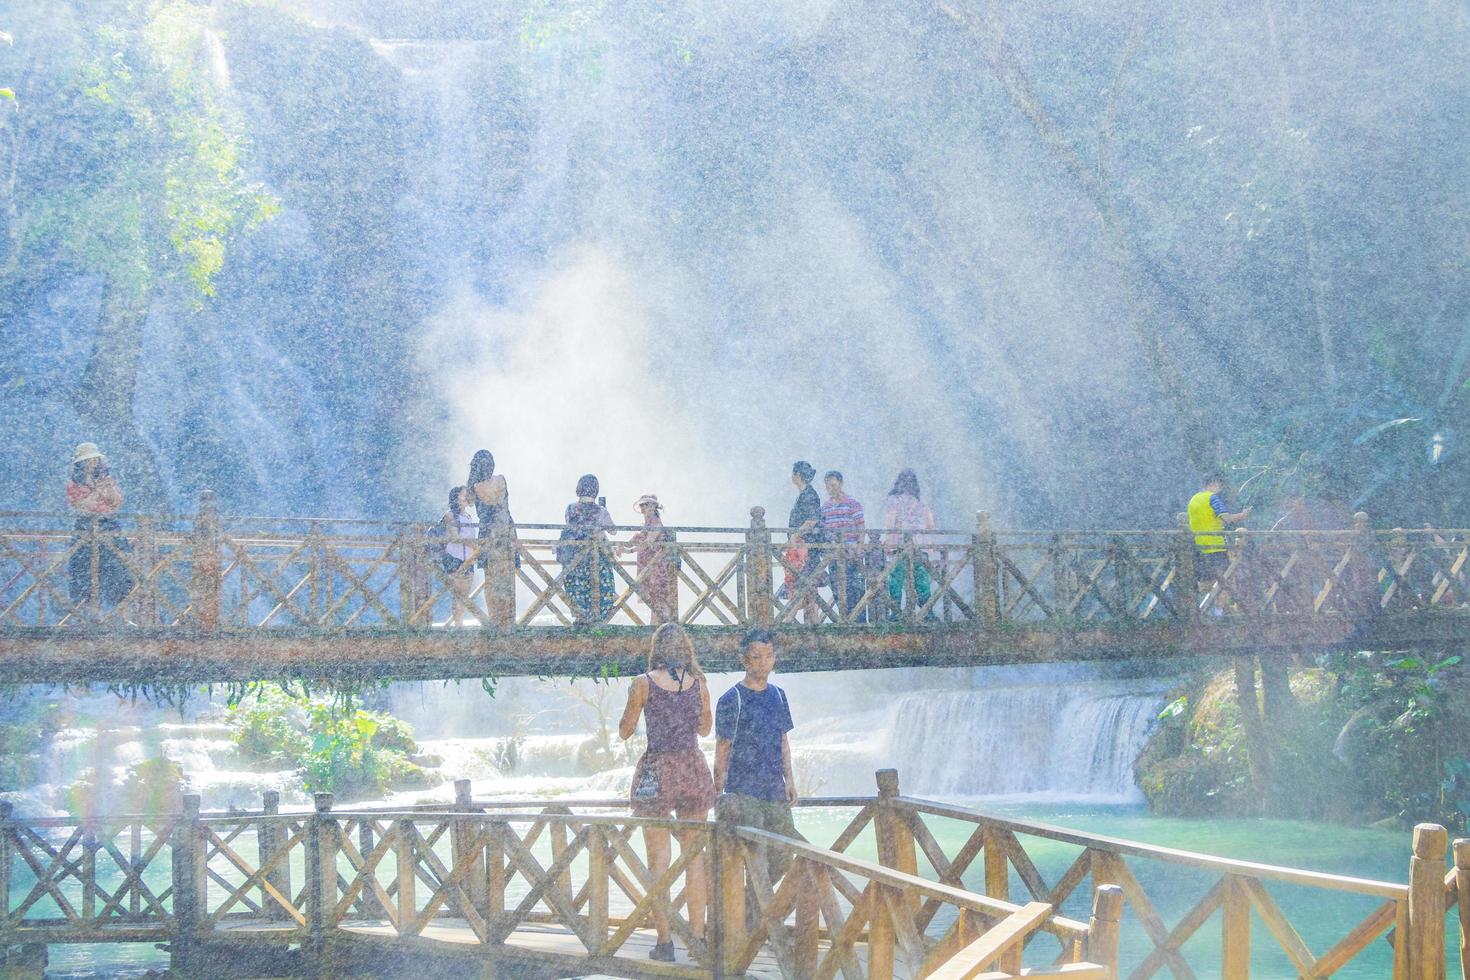 luang prabang laos 21. november 2018 människor vid kuang si vattenfall, luang prabang, laos foto